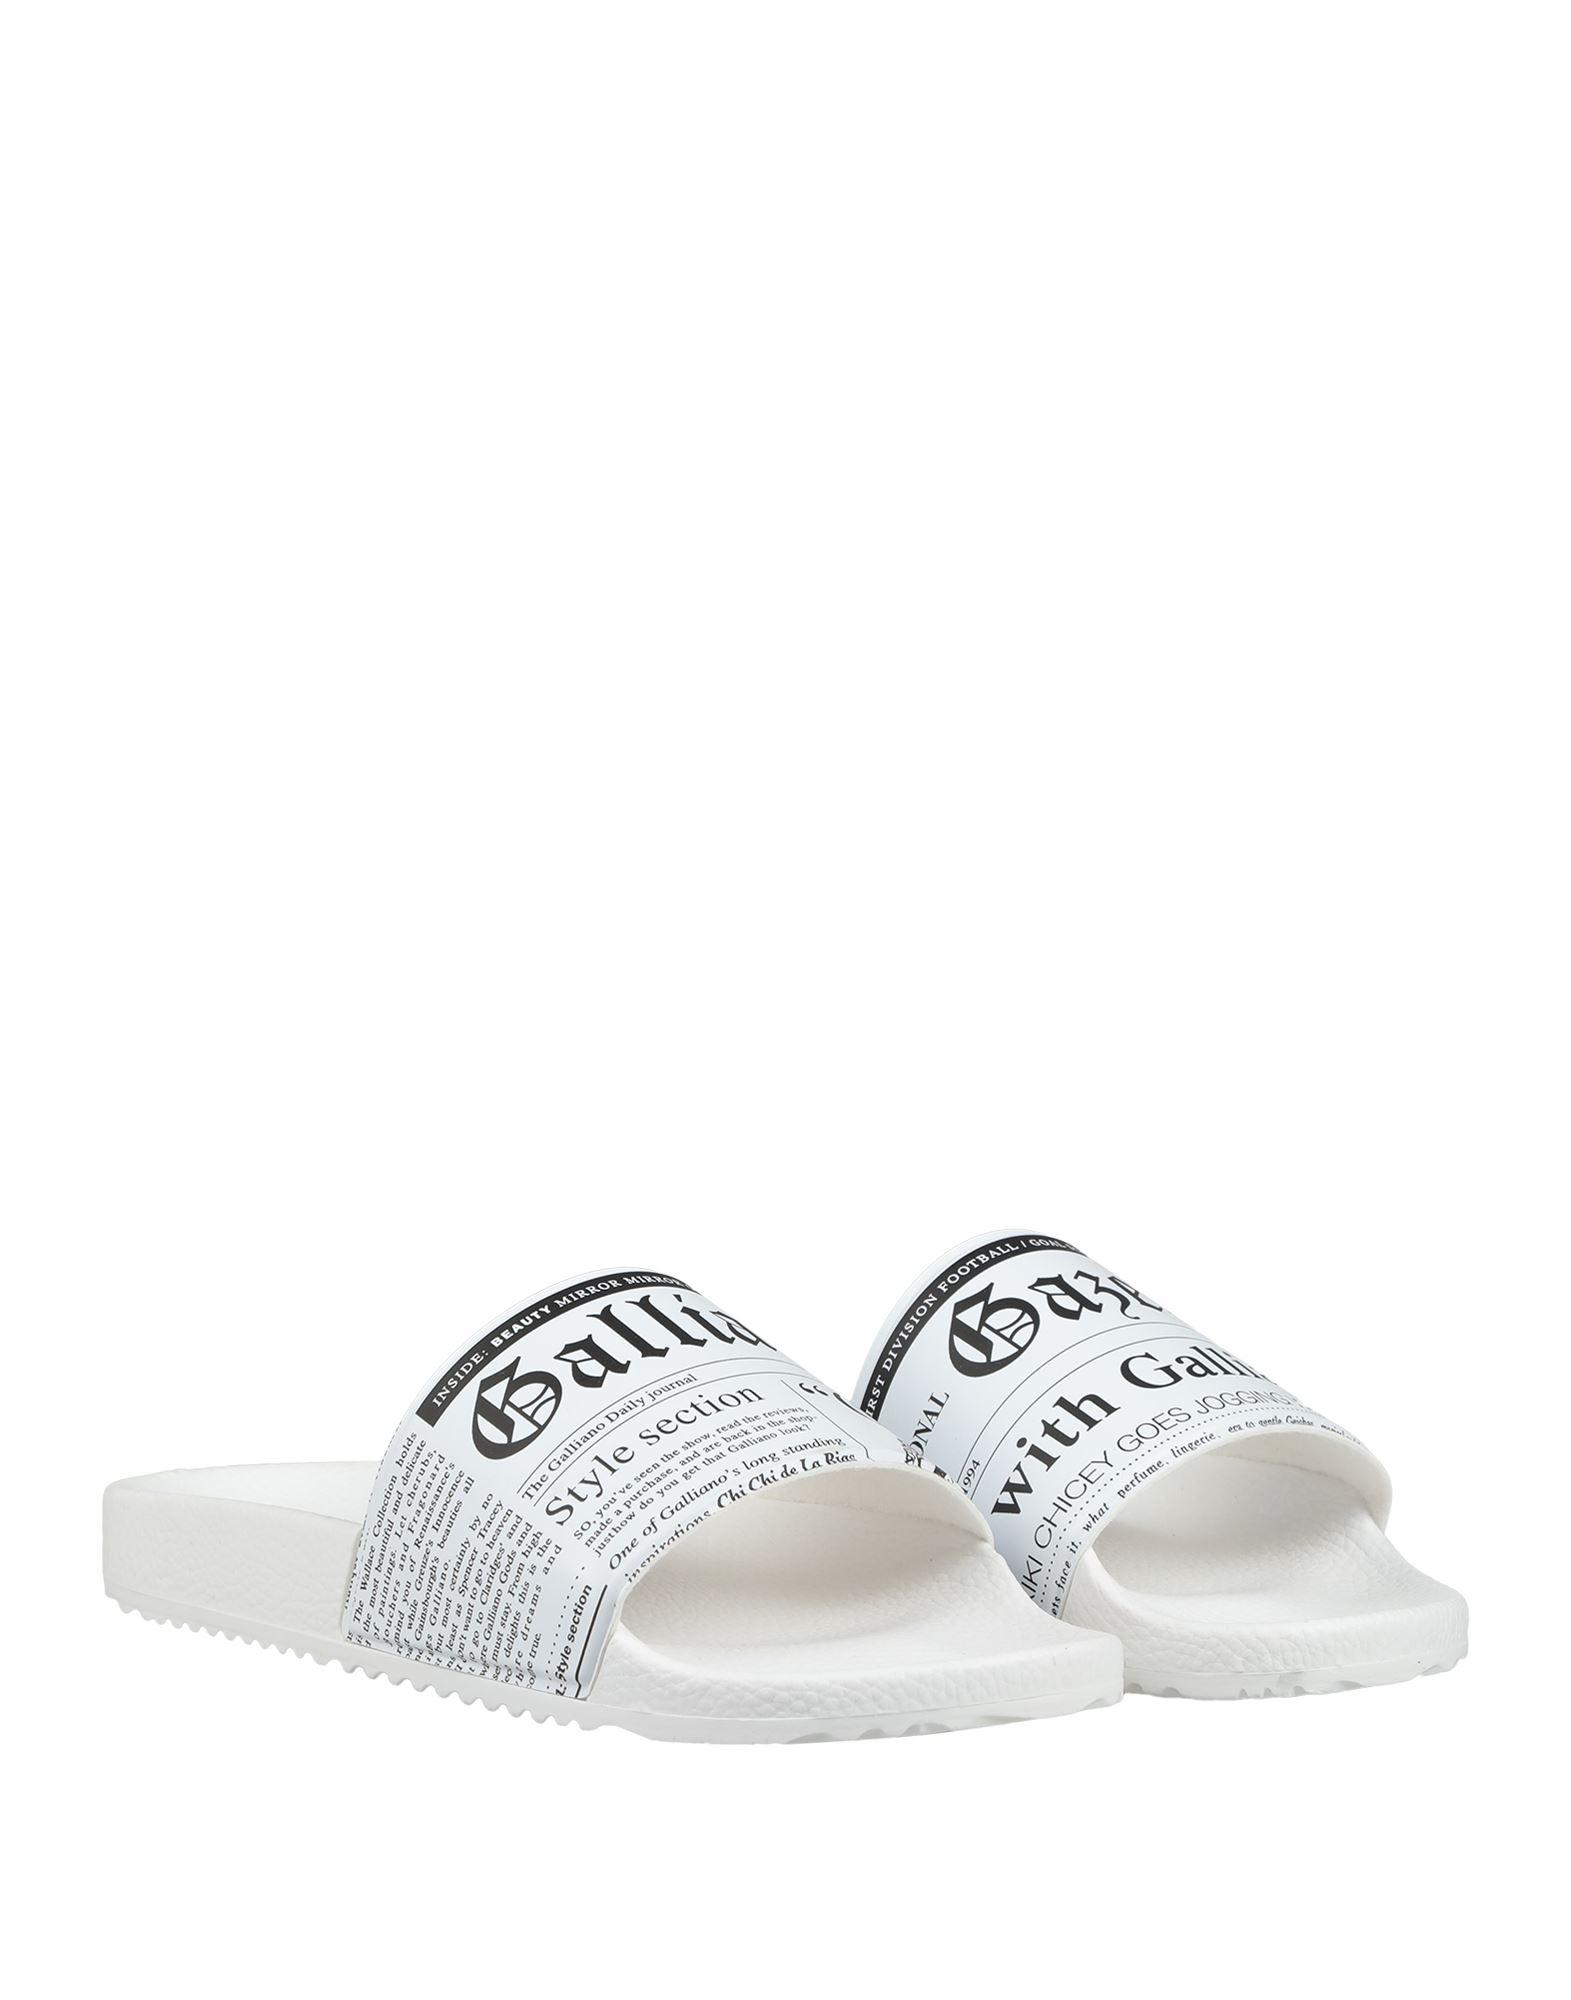 John Galliano Rubber Sandals in White for Men | Lyst